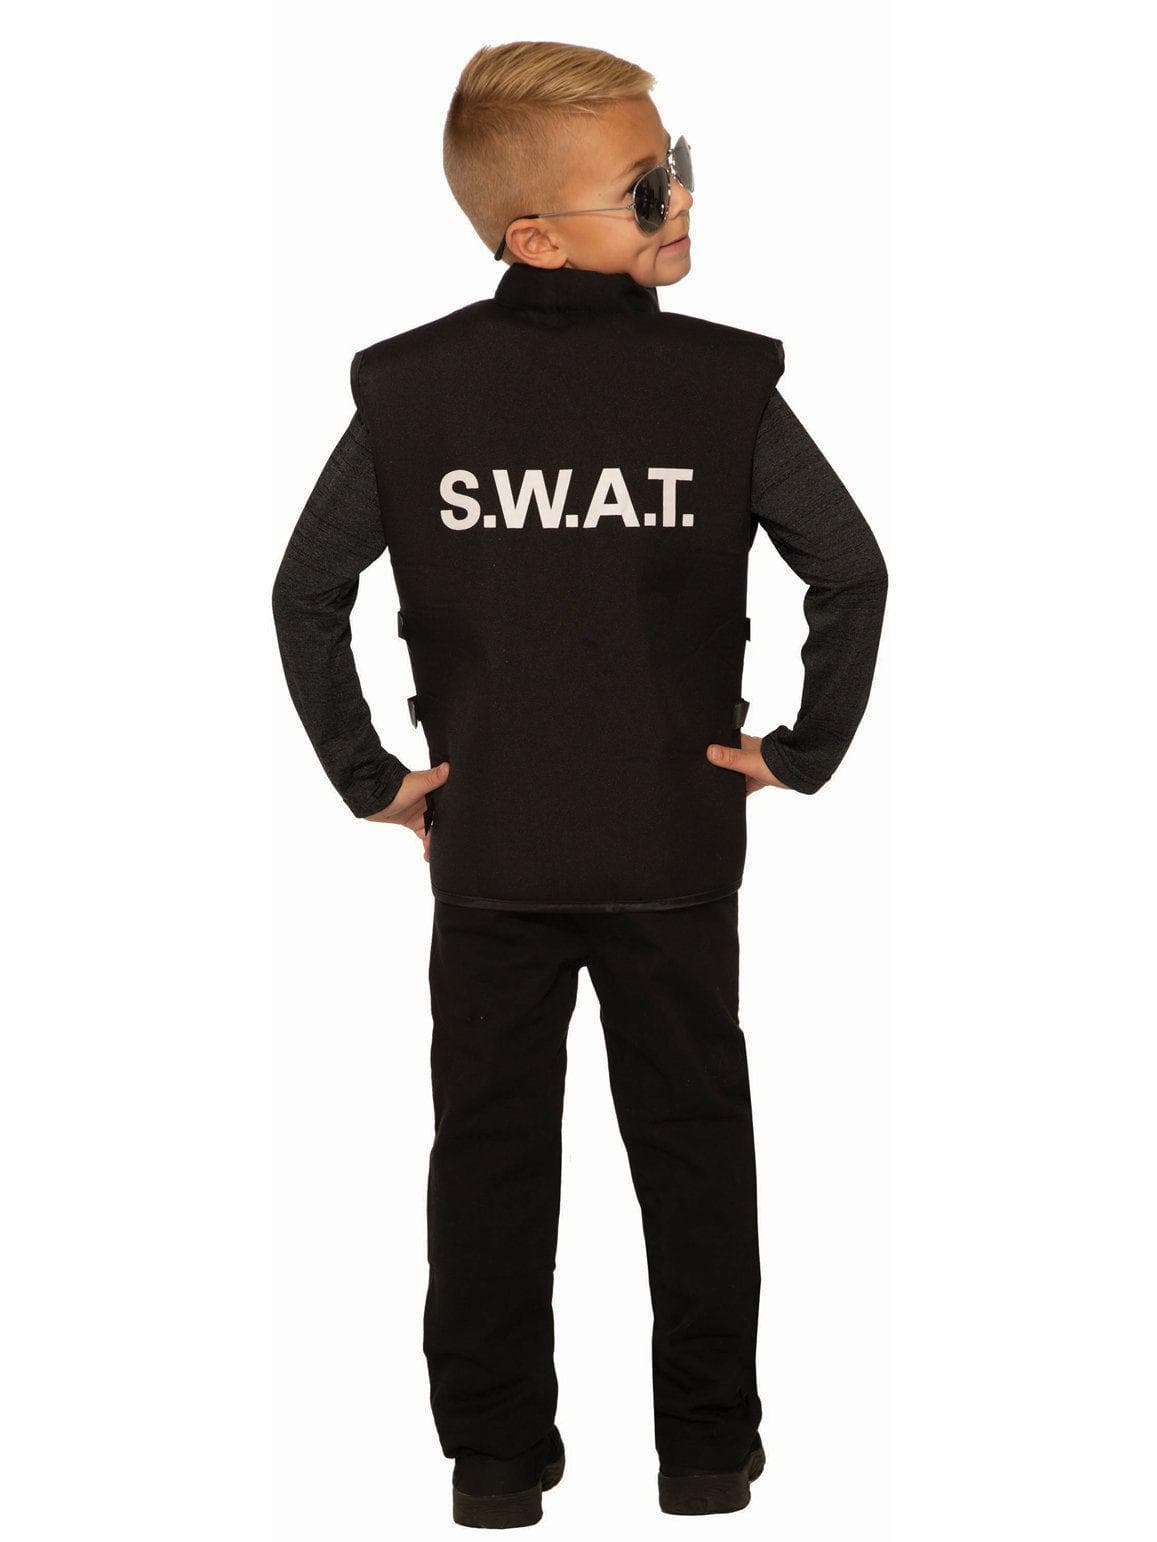 Kid's Swat Vest Costume - costumes.com